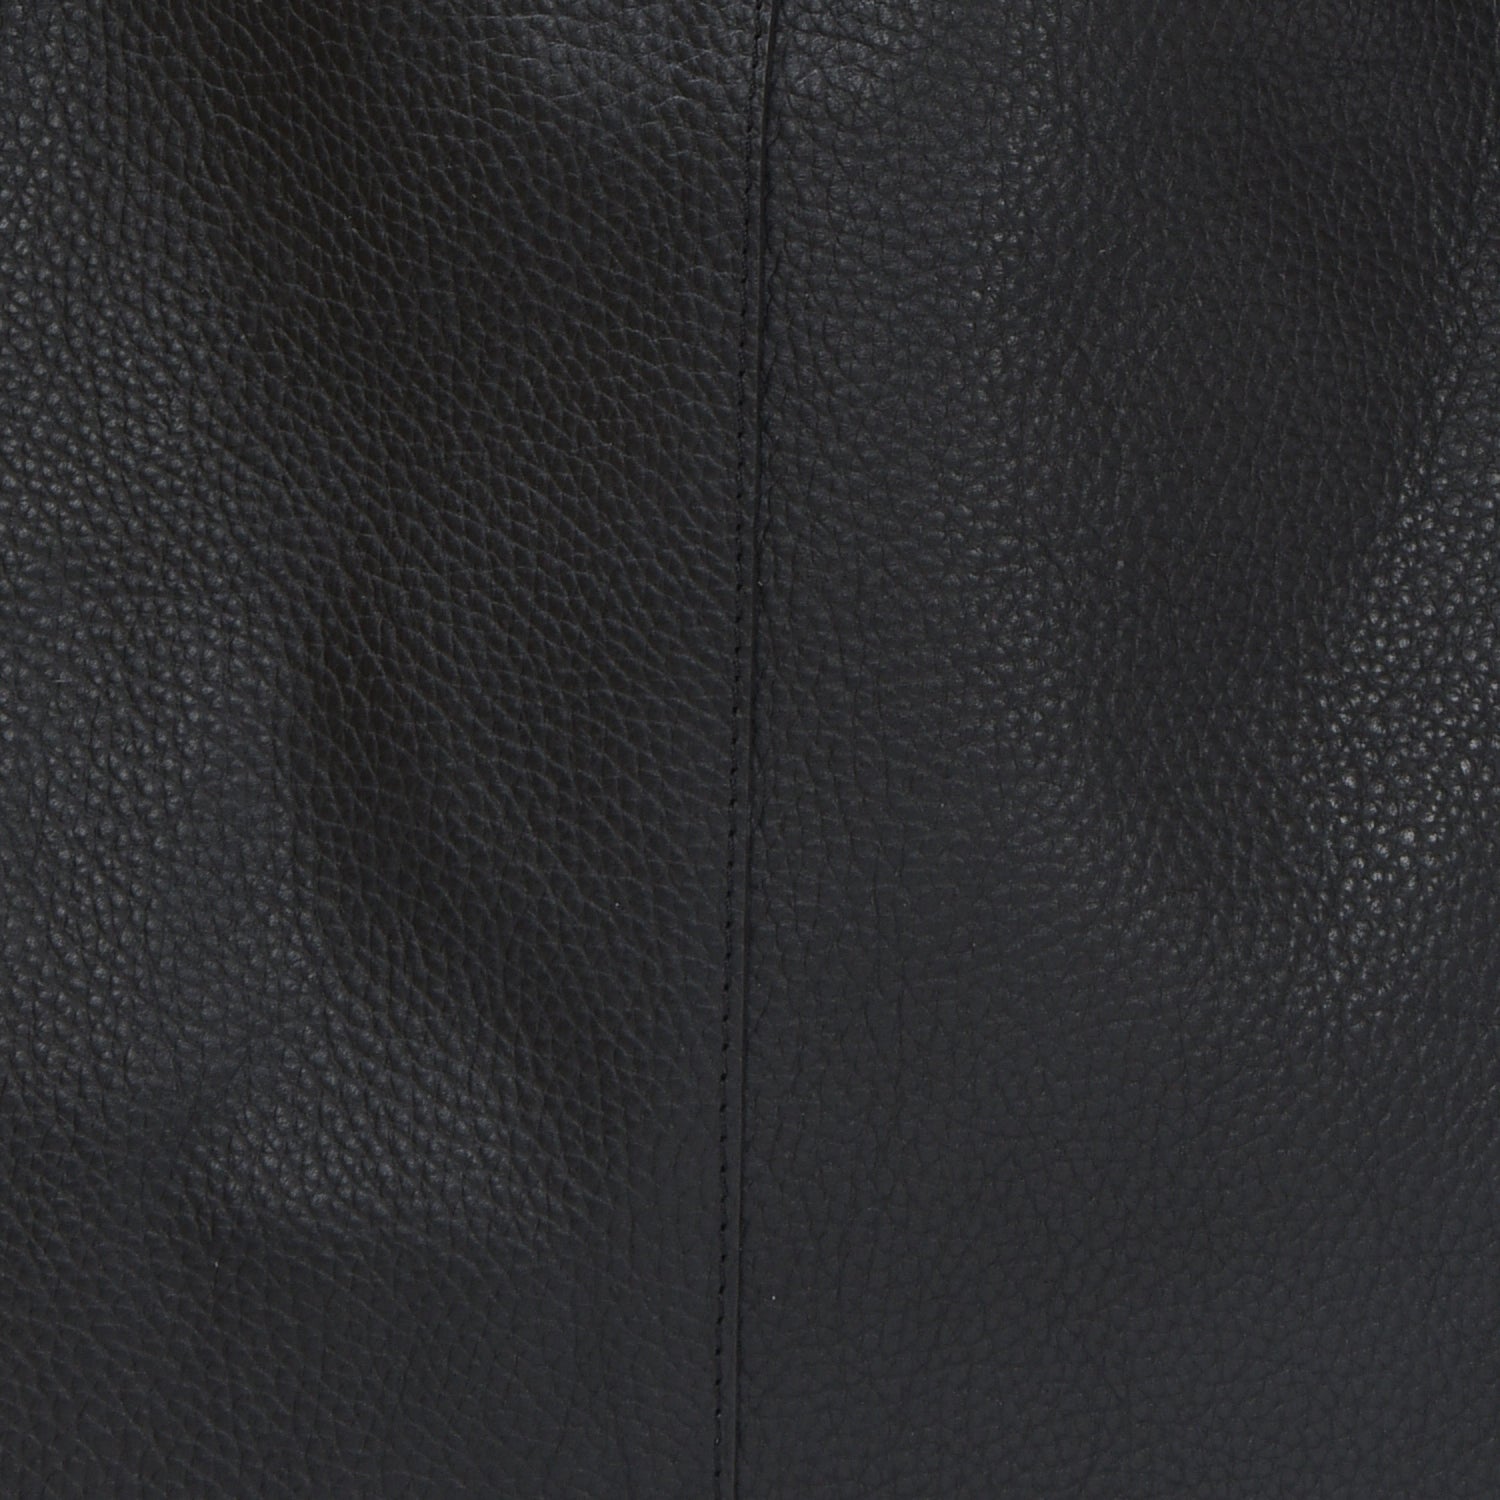 brixbailey-leather-purse_80319780-eb07-422a-accd-b88875fe3e22.jpg